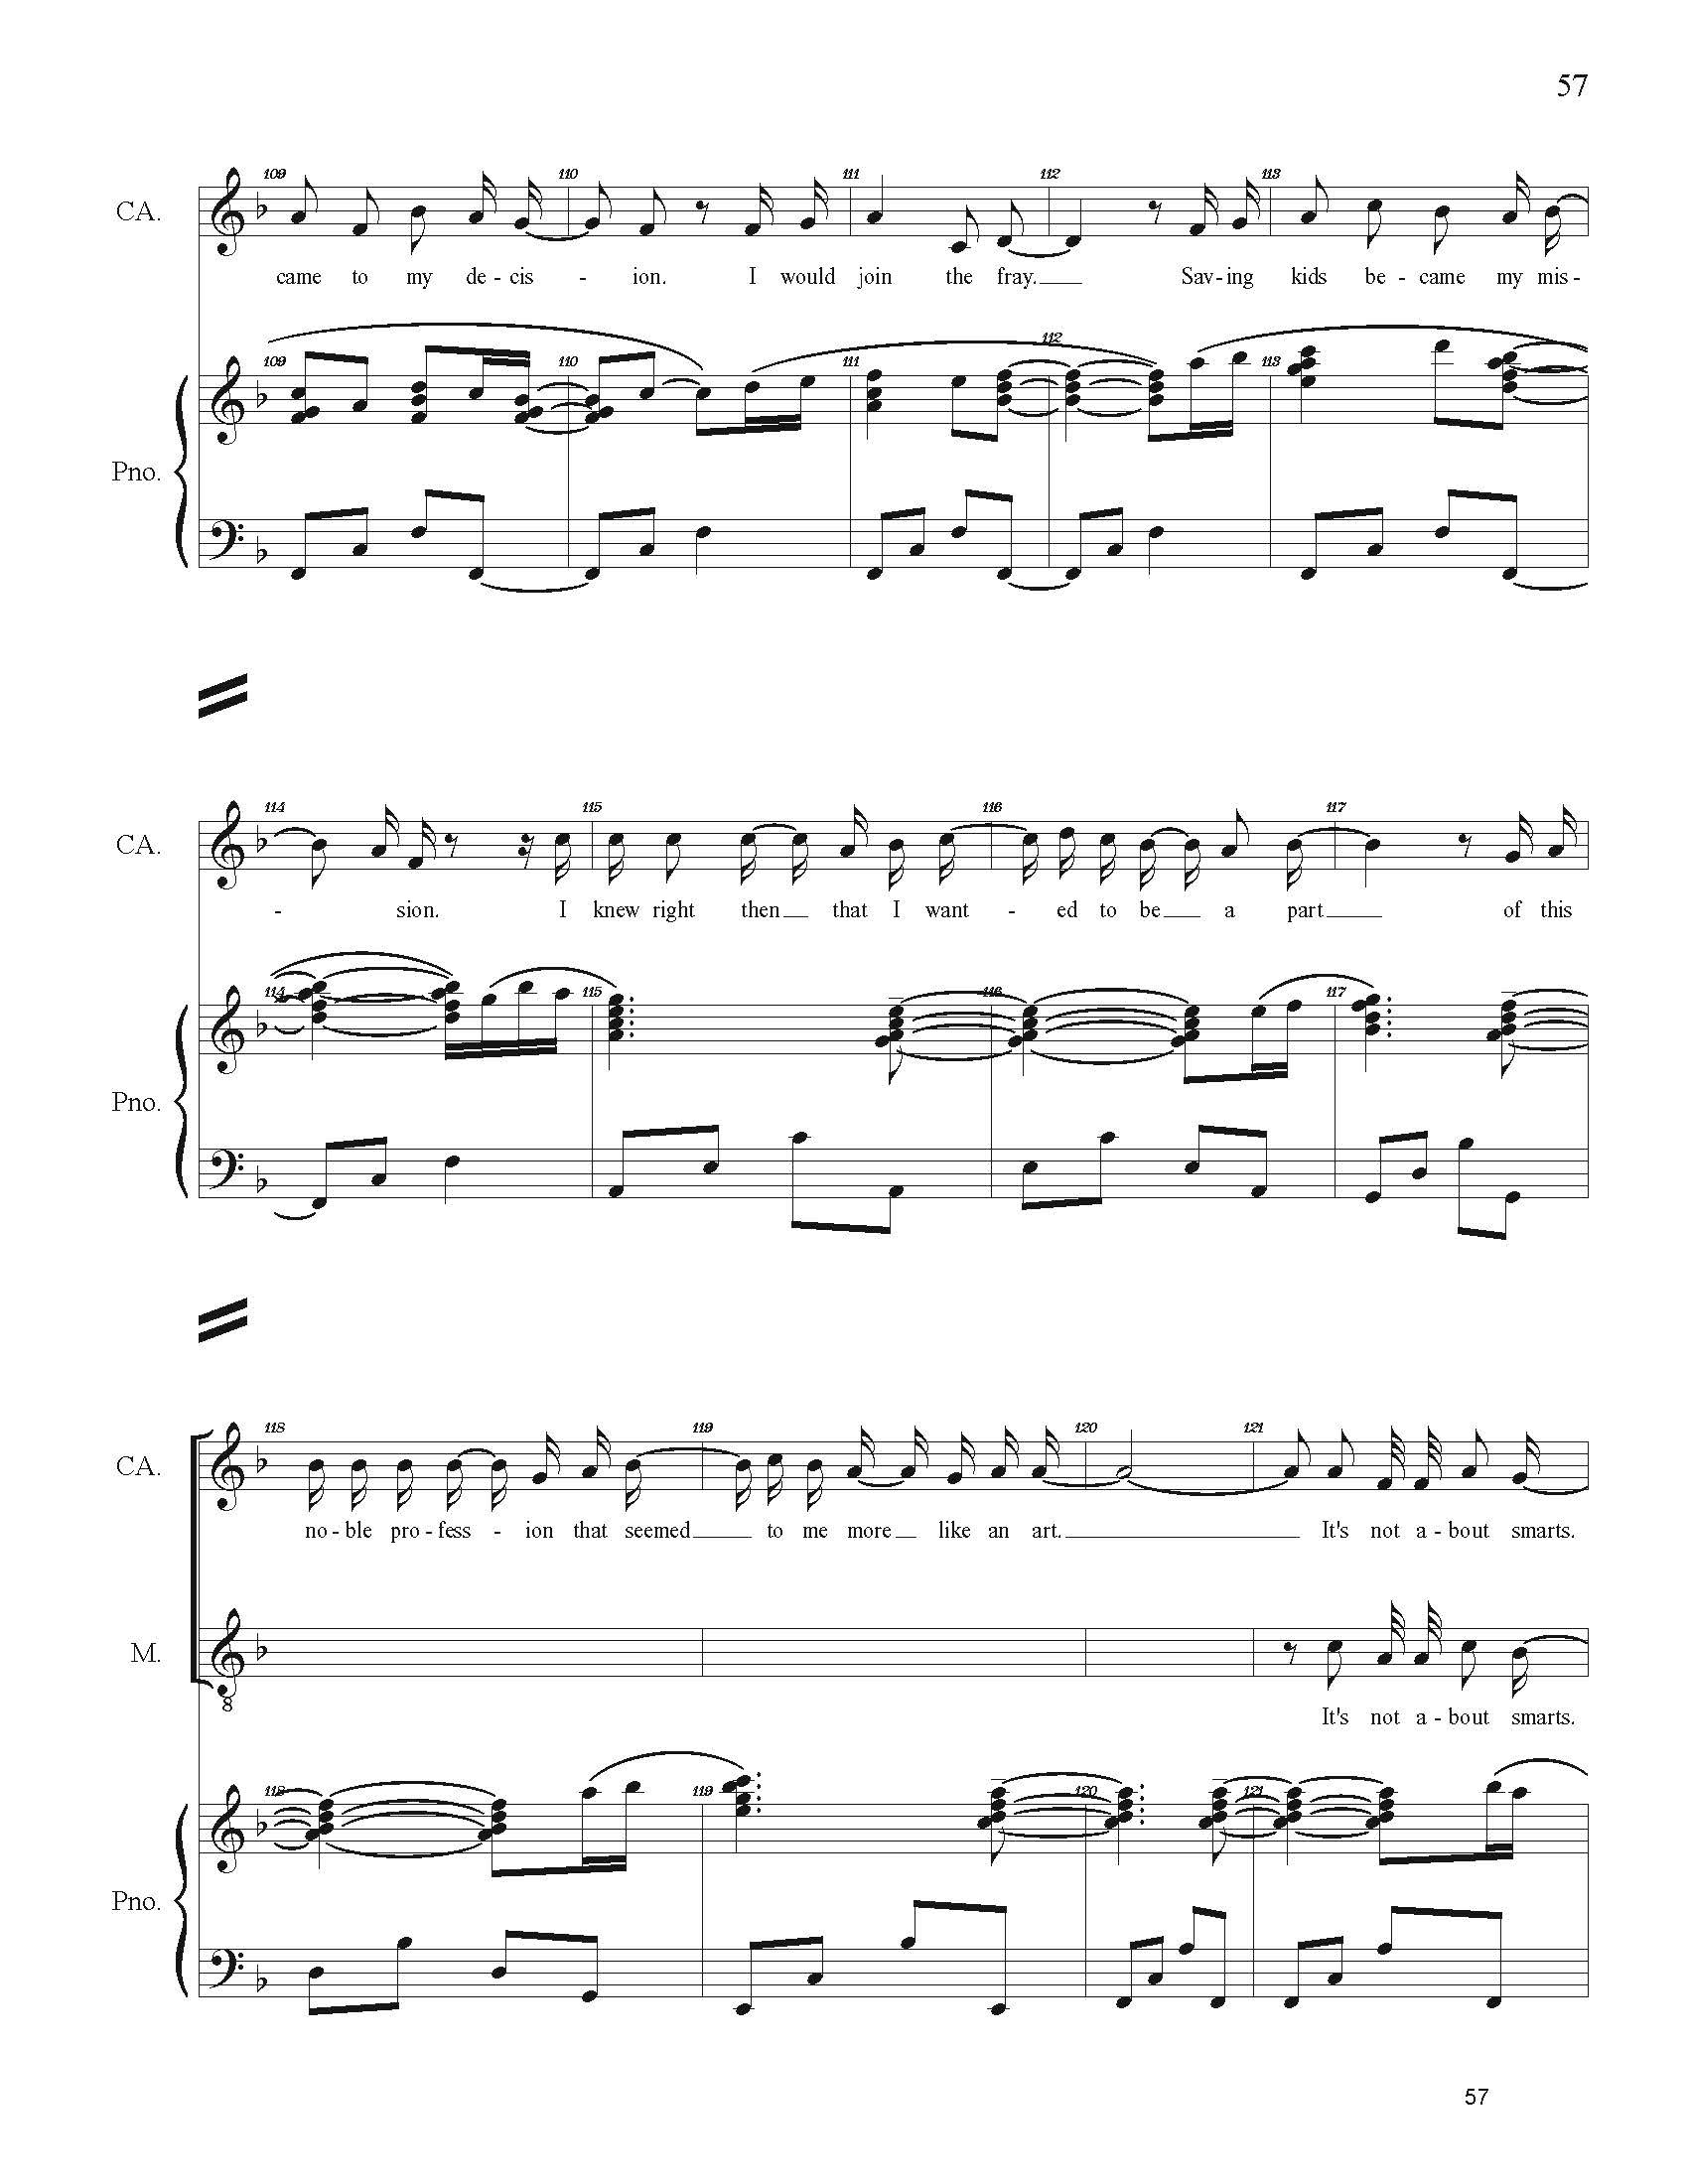 FULL PIANO VOCAL SCORE DRAFT 1 - Score_Page_057.jpg